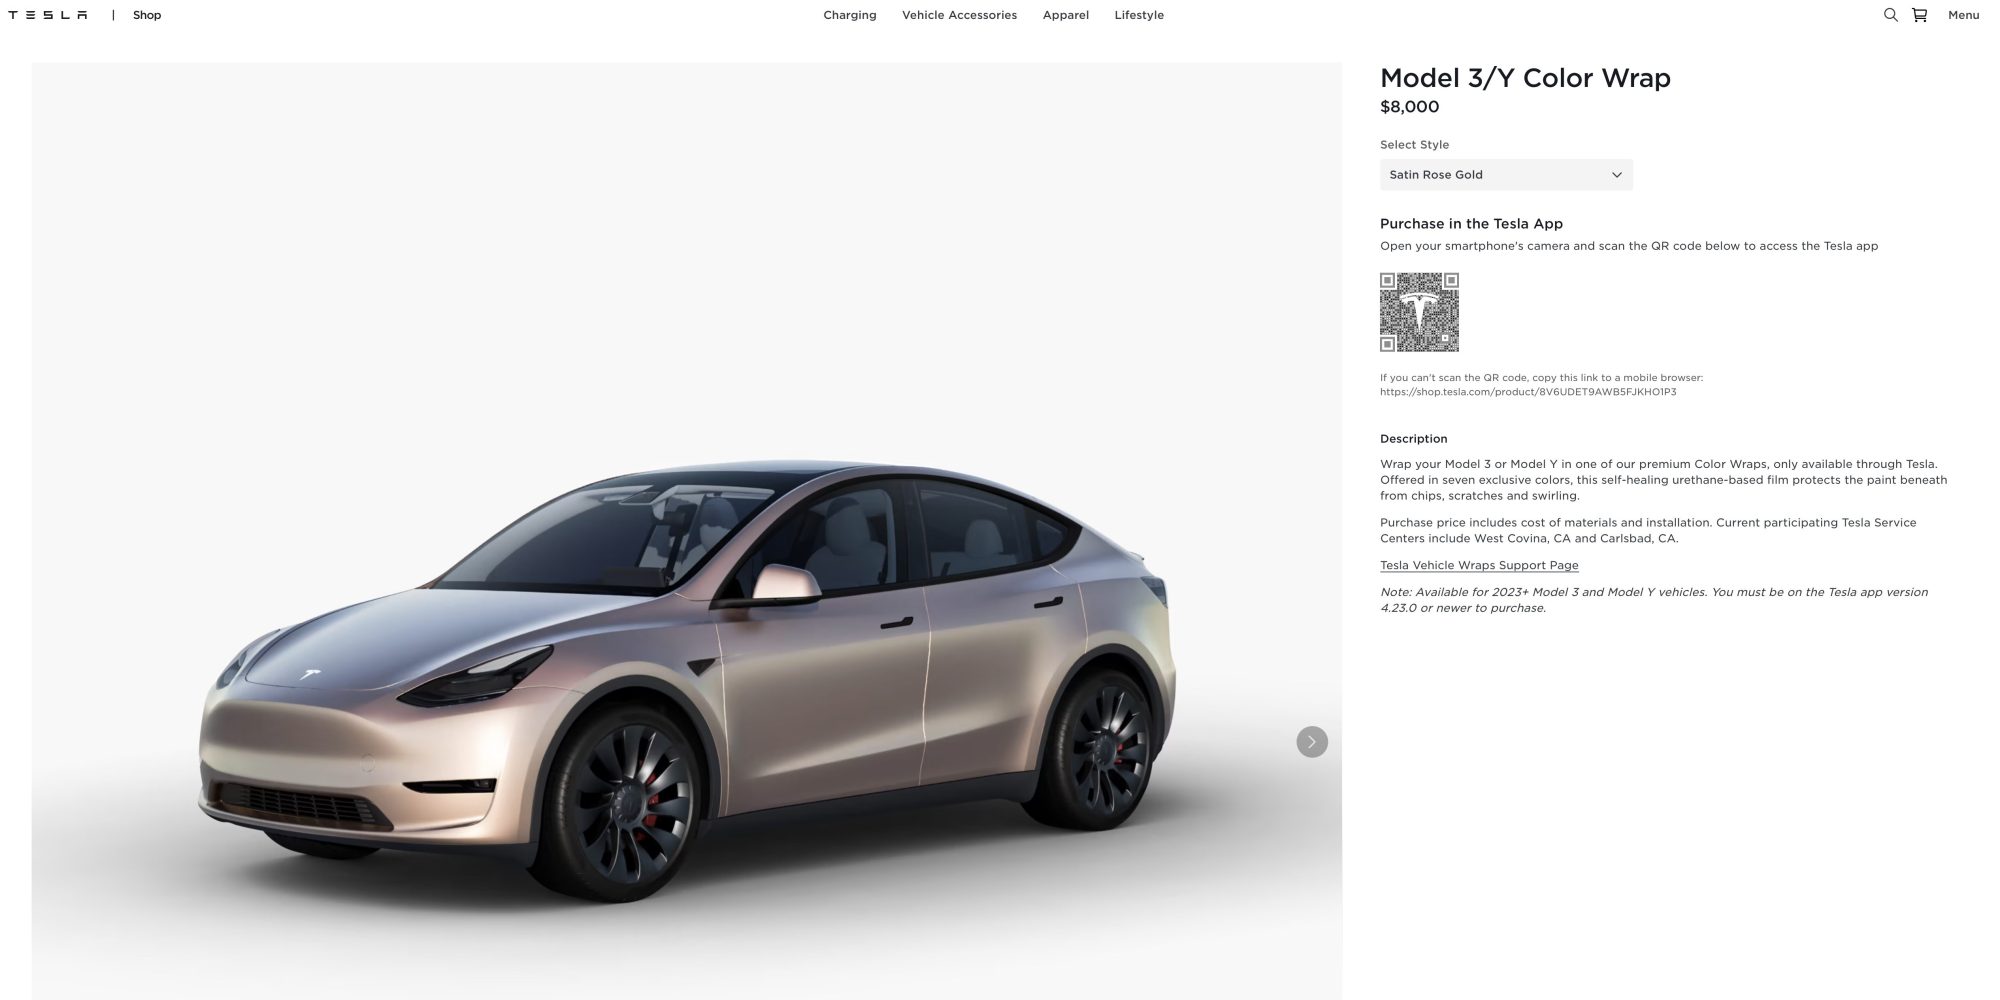 Tesla starts selling vehicle wraps for Model 3/Y at a pricey $7.5K-$8K